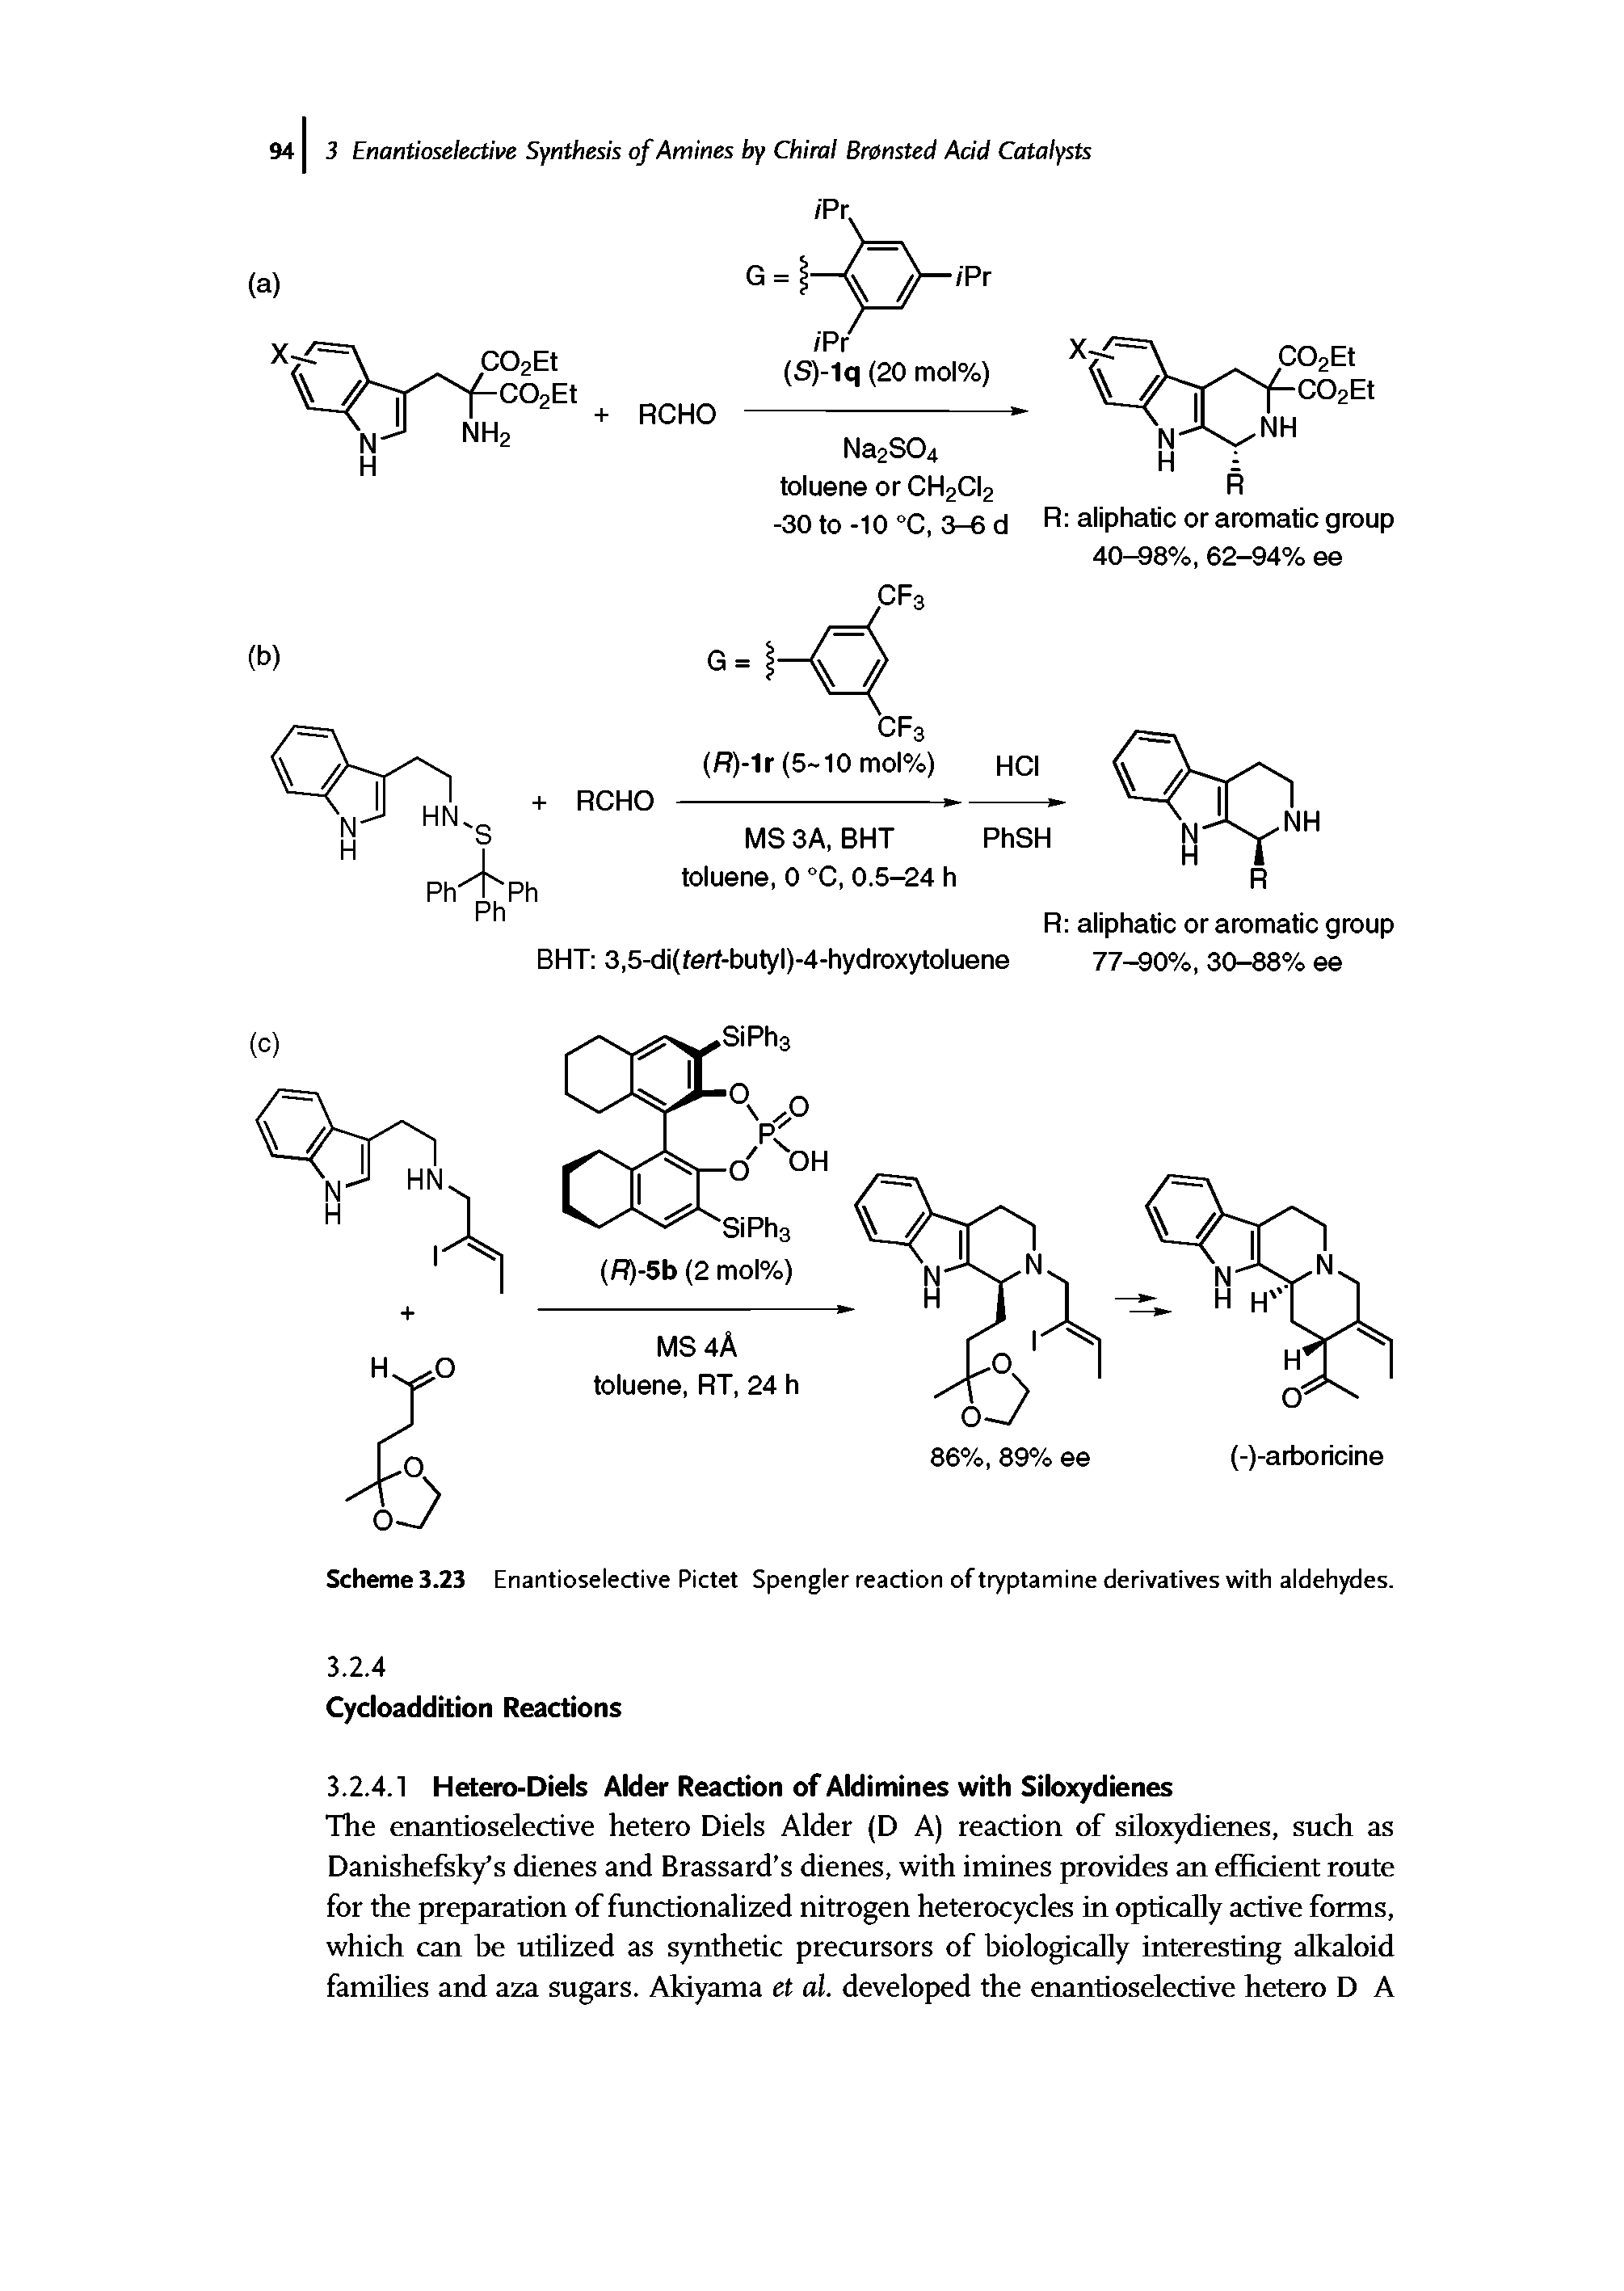 Scheme 3.23 Enantioselective Pictet Spengler reaction of tryptamine derivatives with aldehydes.